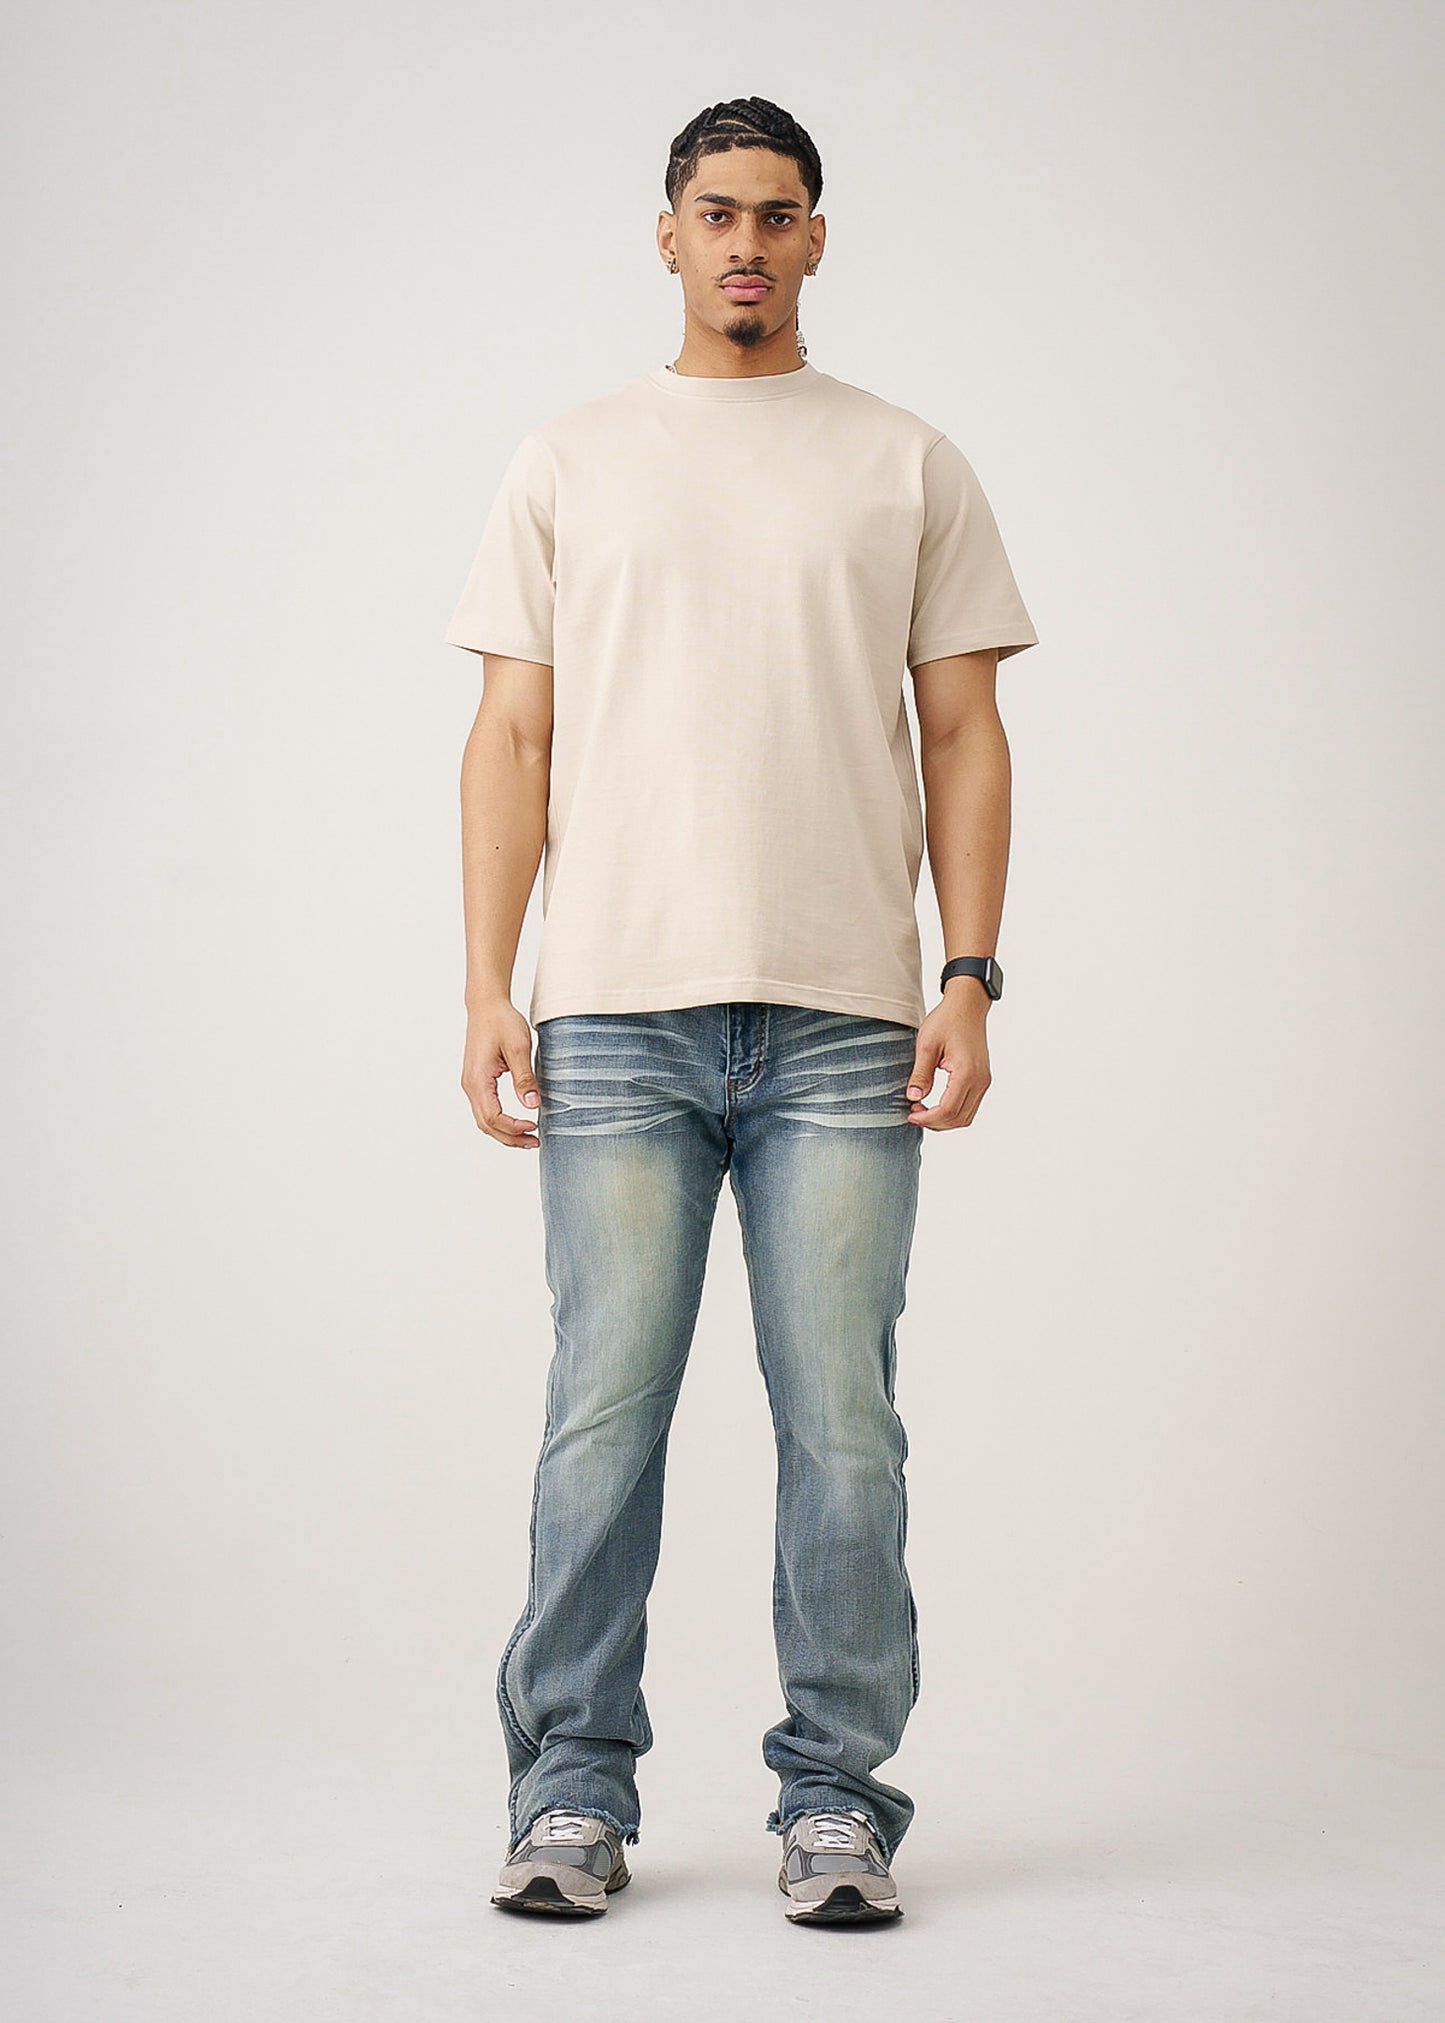 10 OZ Heavyweight Cotton T-Shirt